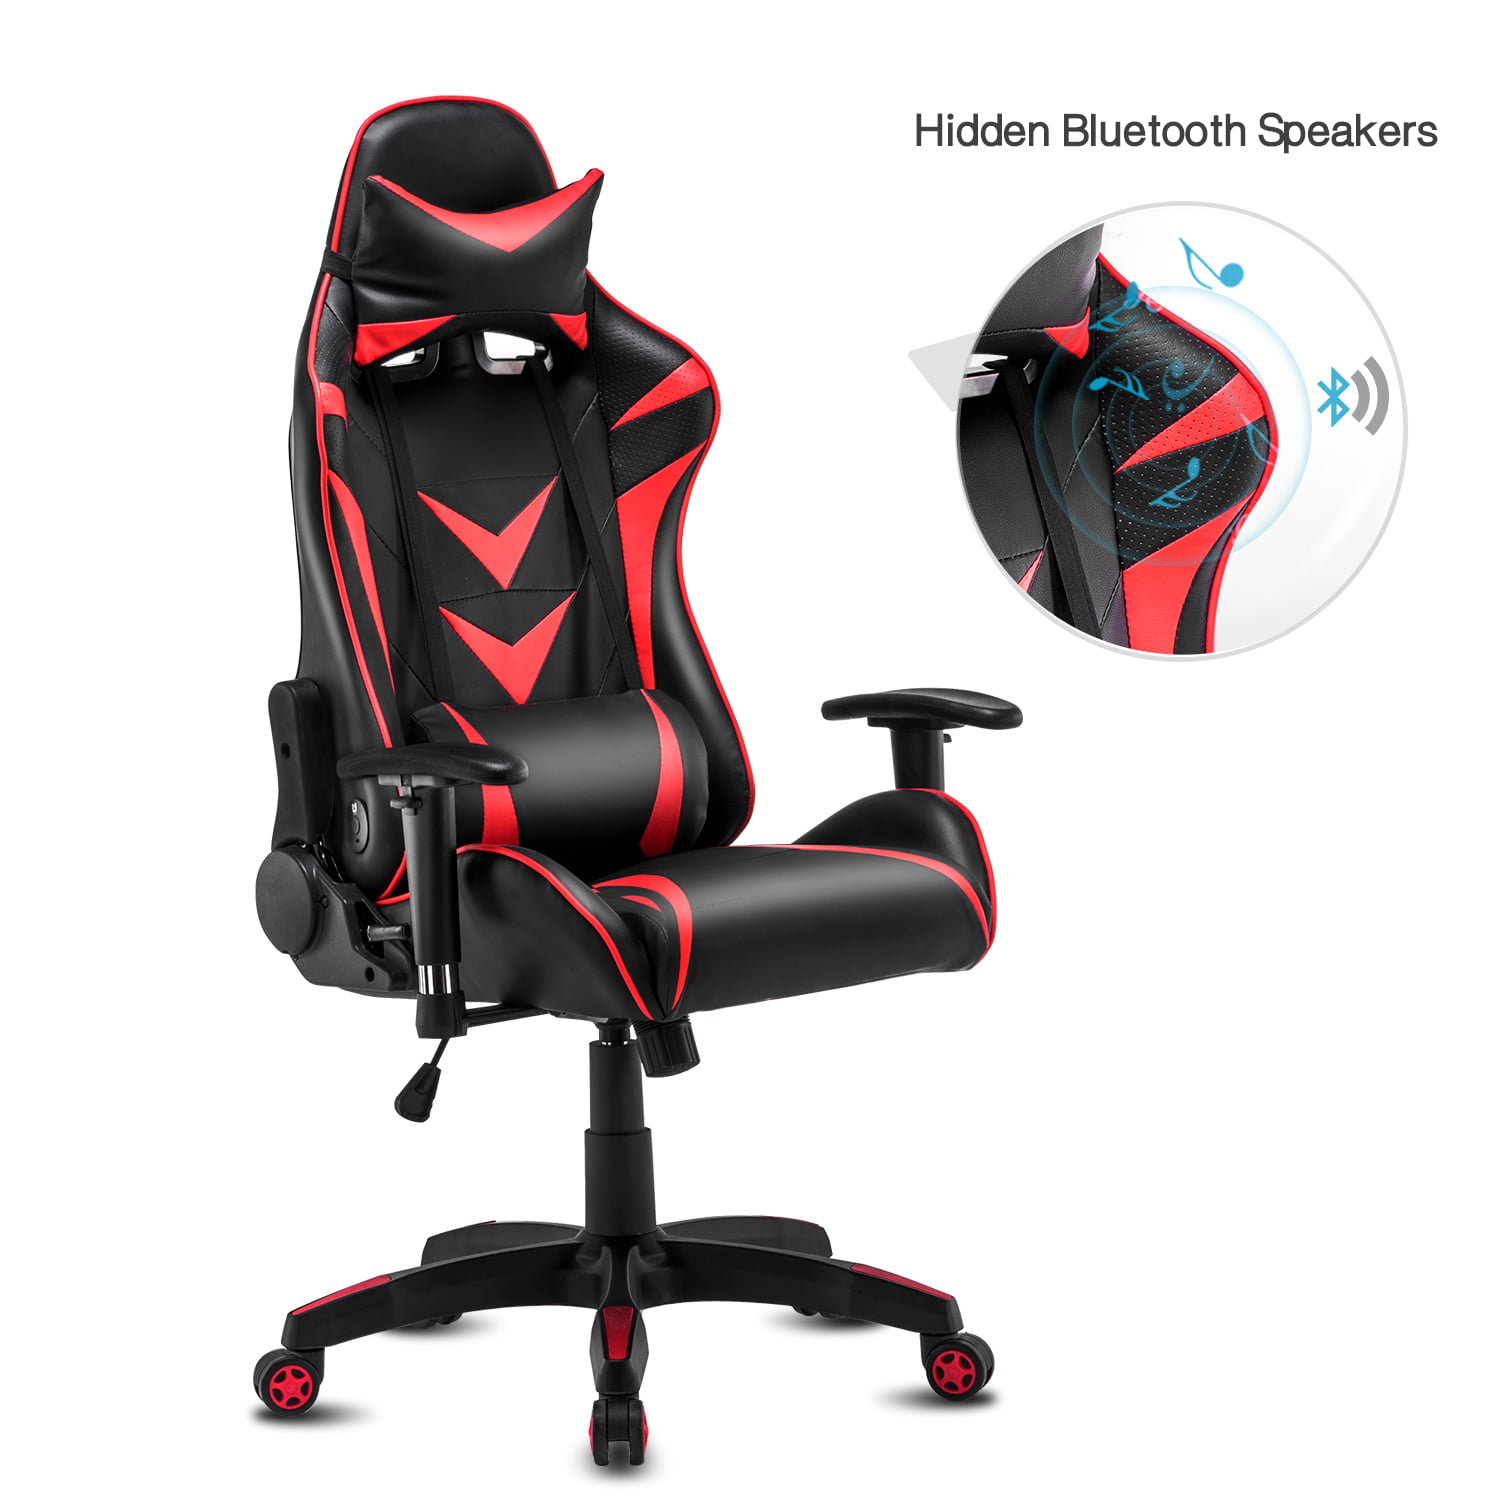 High Back Swivel Gaming Chair Recliner With Bluetooth 4 1 Version Speakers Lumbar Support Headrest Height Adjustable Ergonomic Office Desk Chair Walmart Com Walmart Com